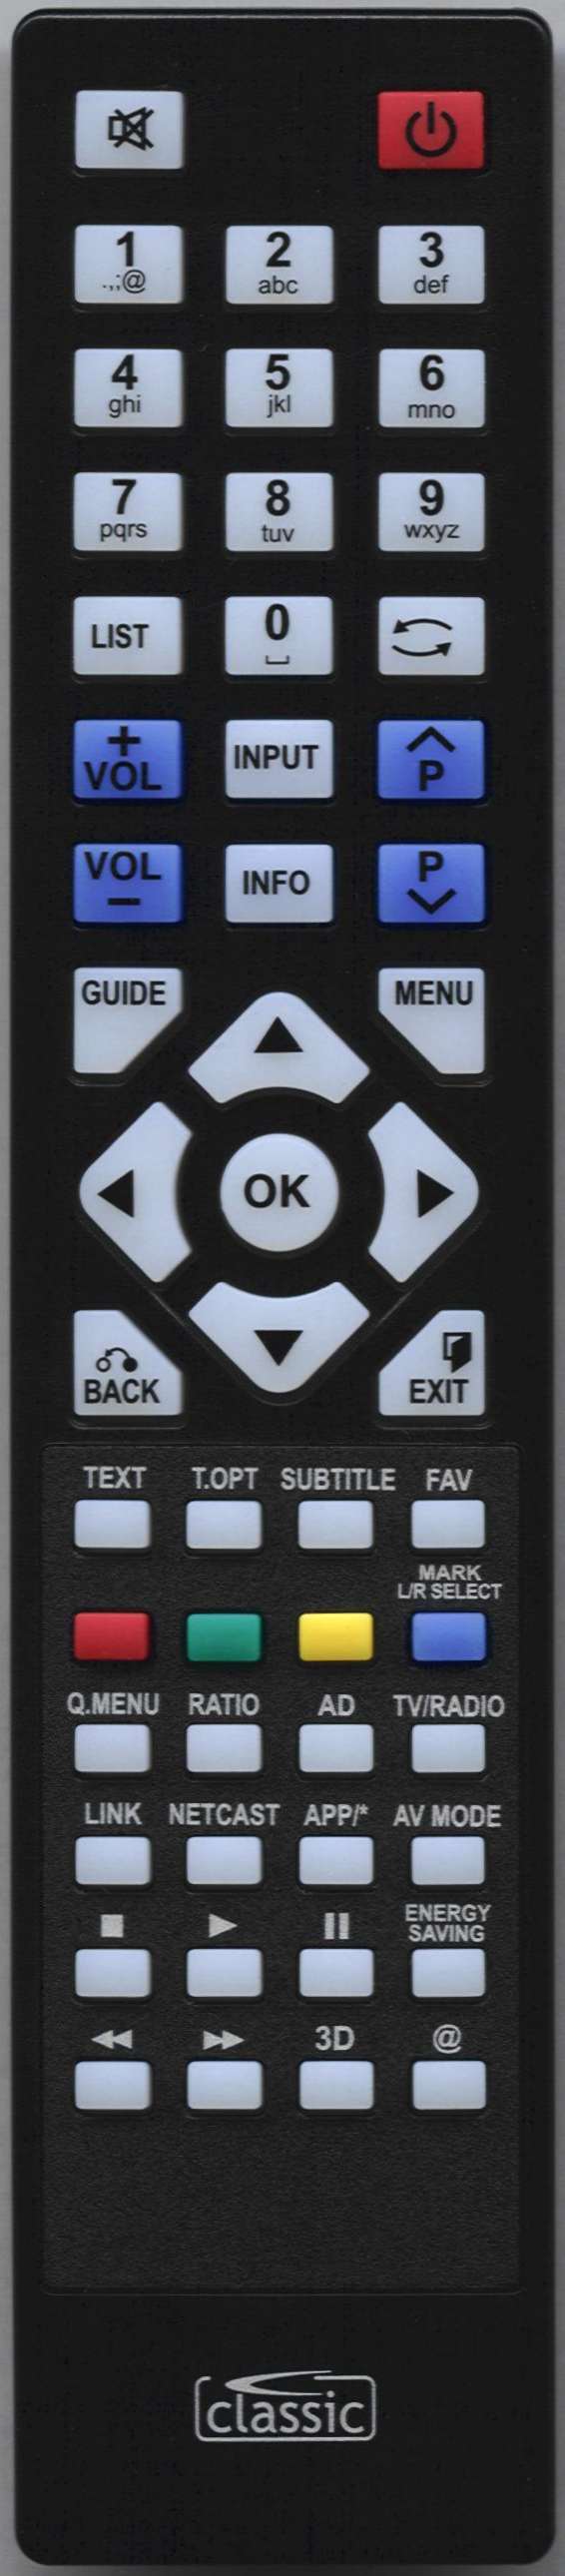 LG MKJ61841813 Remote Control Alternative